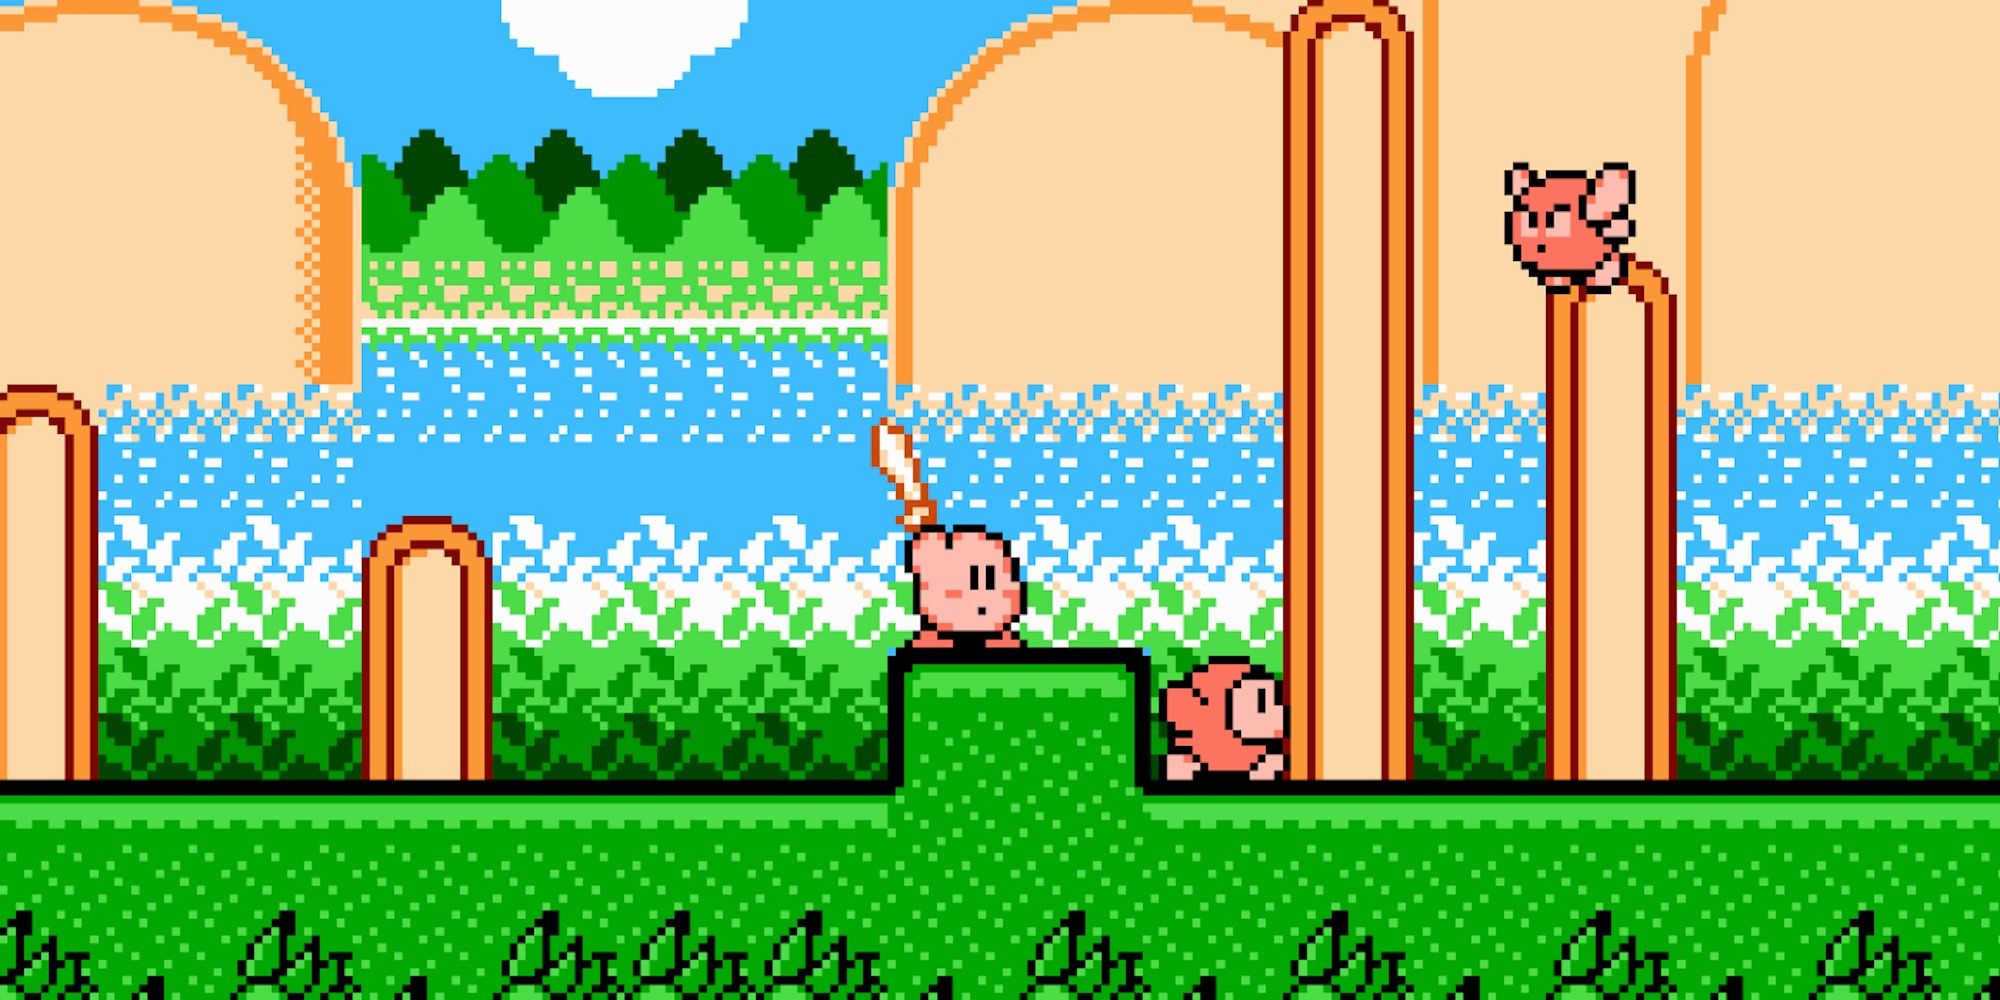 Fight enemies in Kirby's Adventure